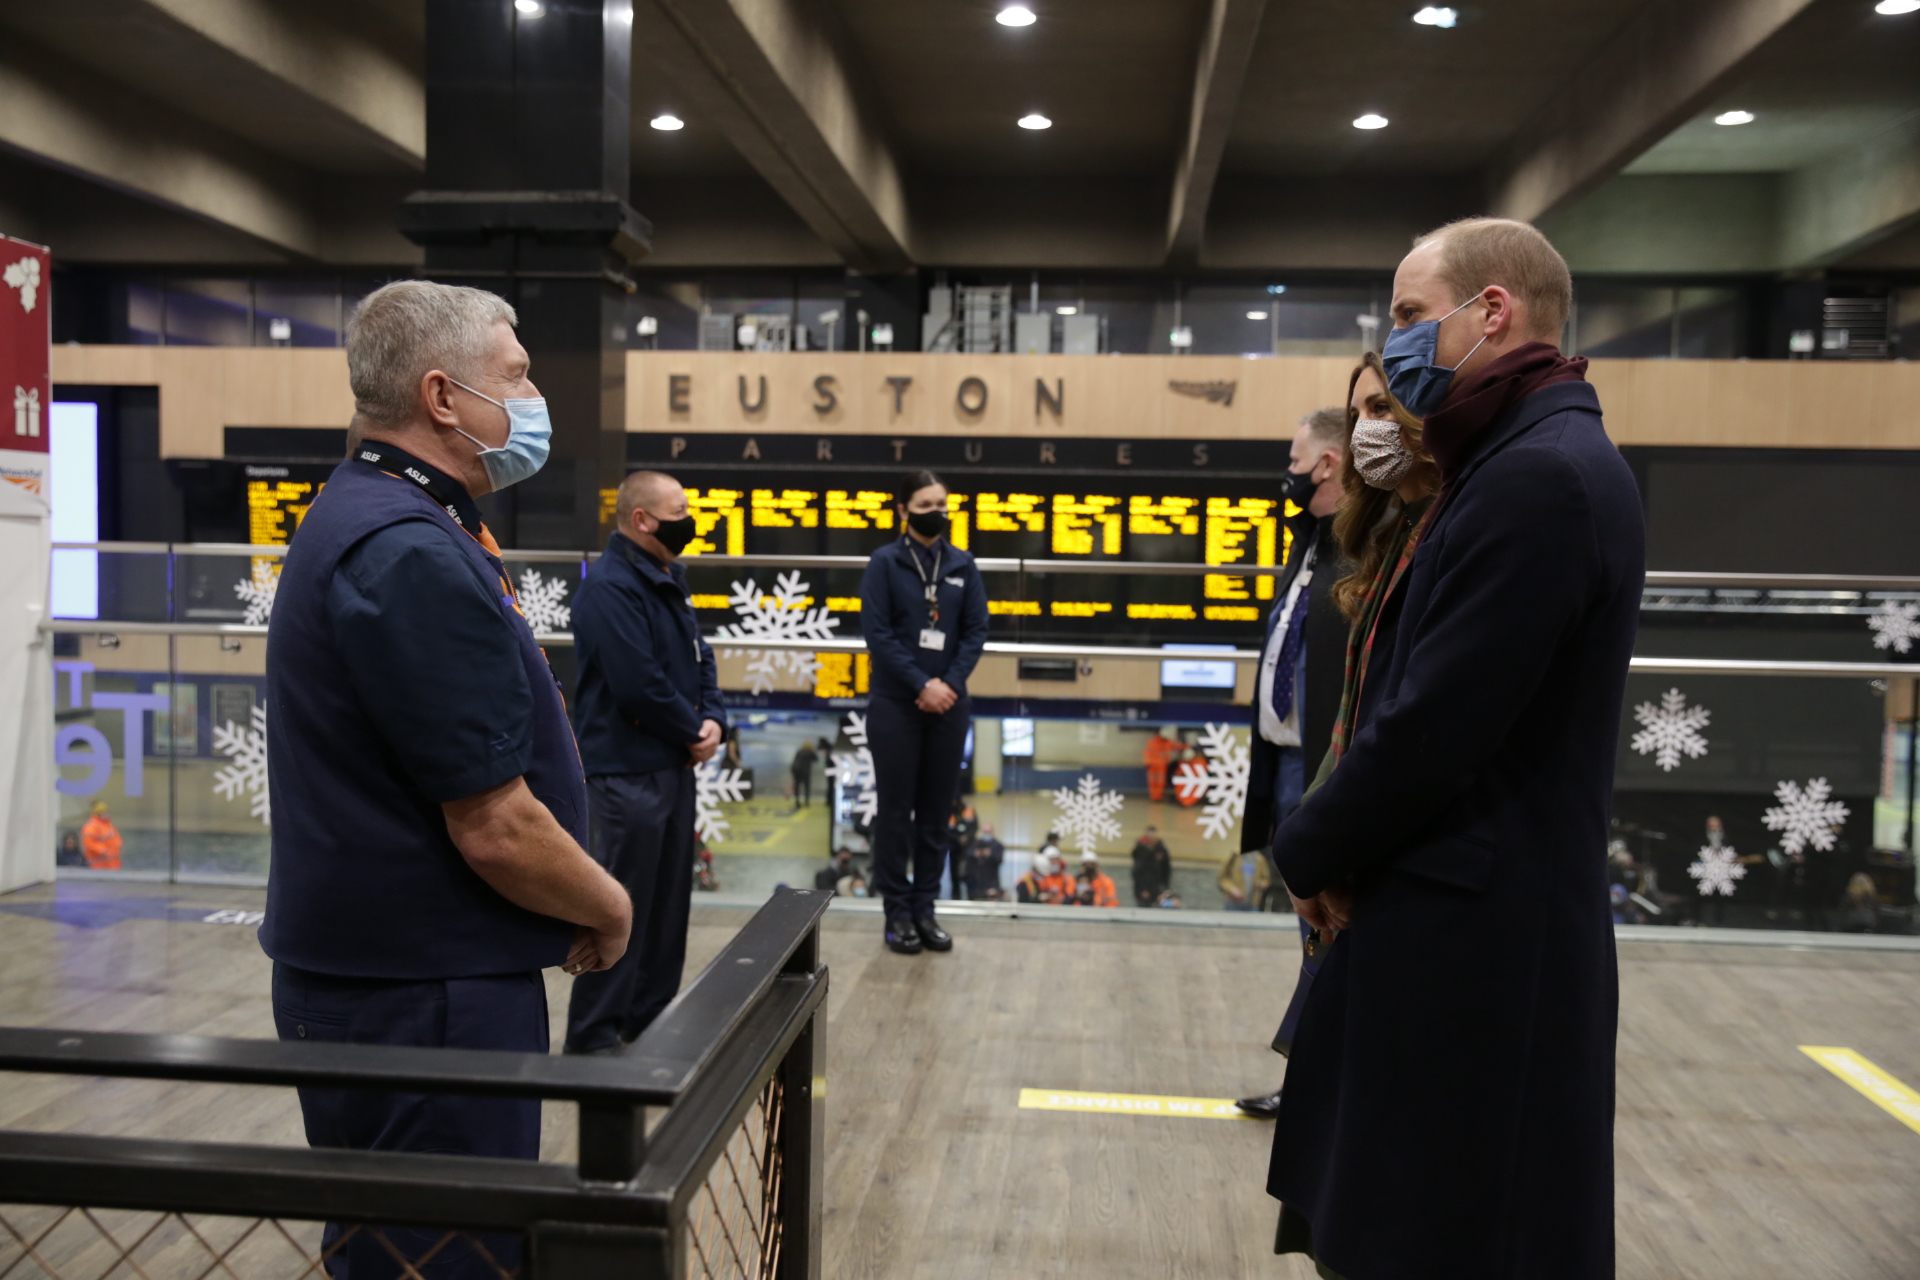 Euston Station’s surprise visitors, the Duke and Duchess of Cambridge